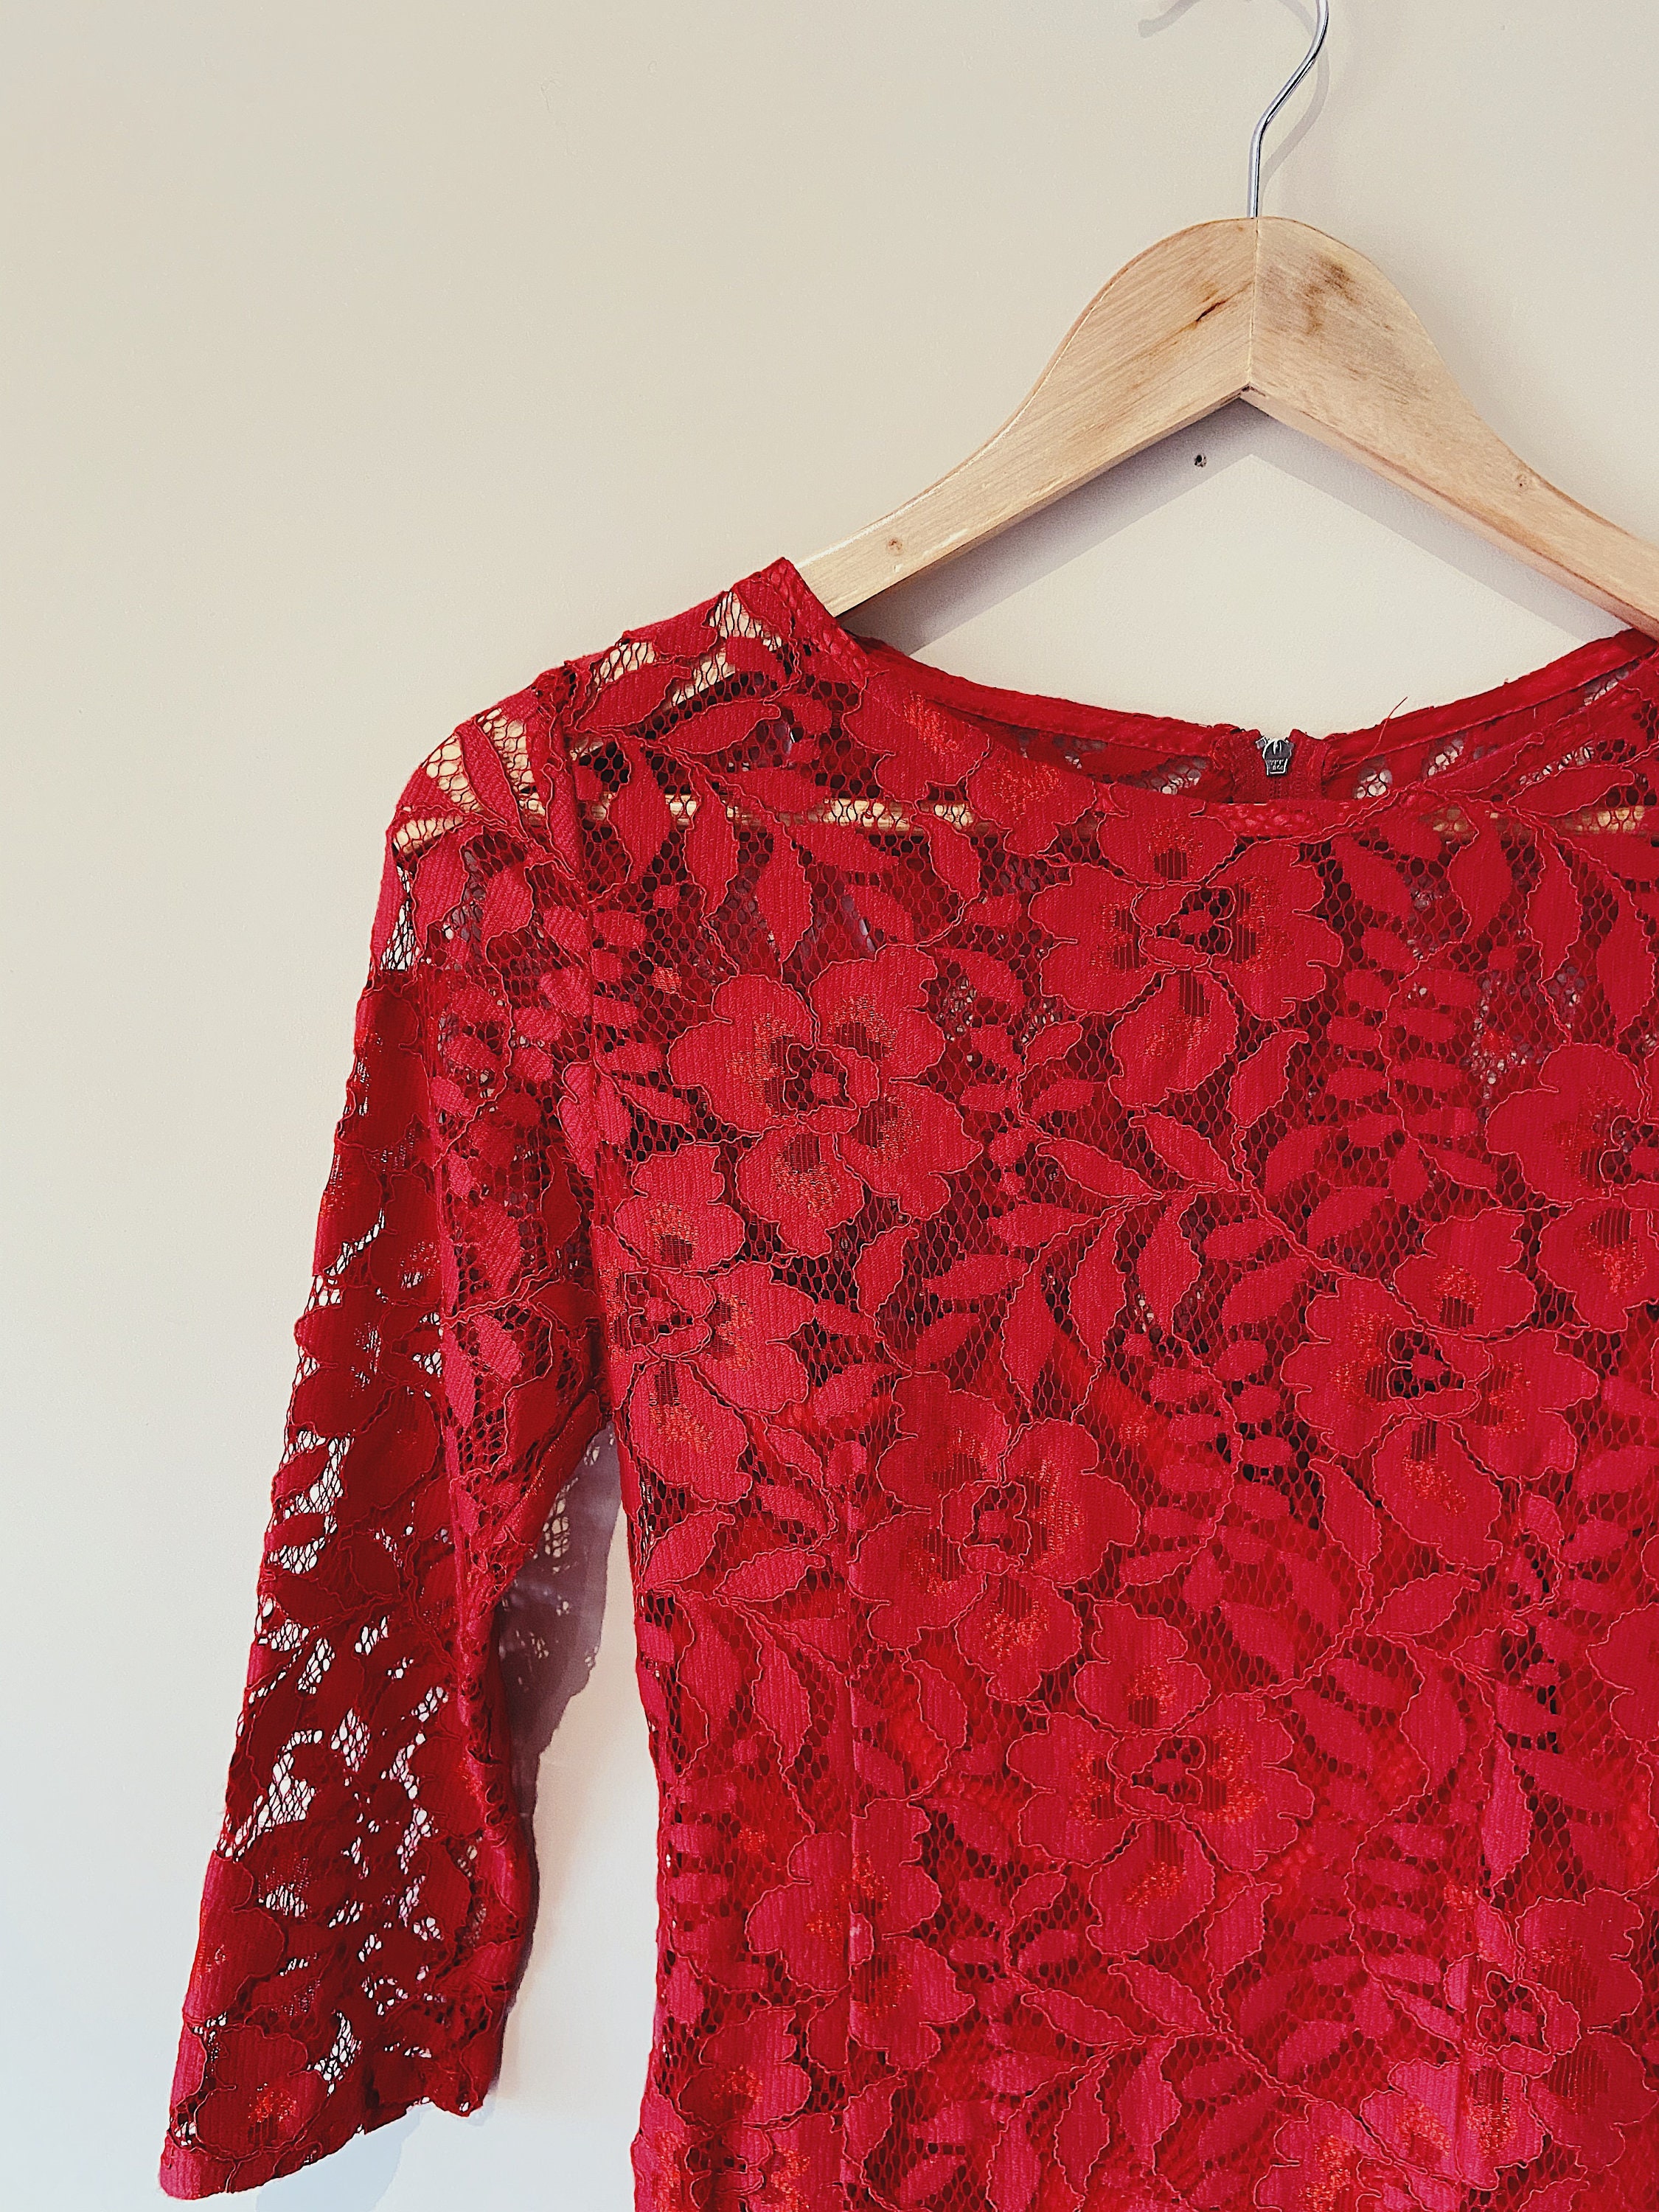 Vintage style red lace dress Women's festive evening | Etsy